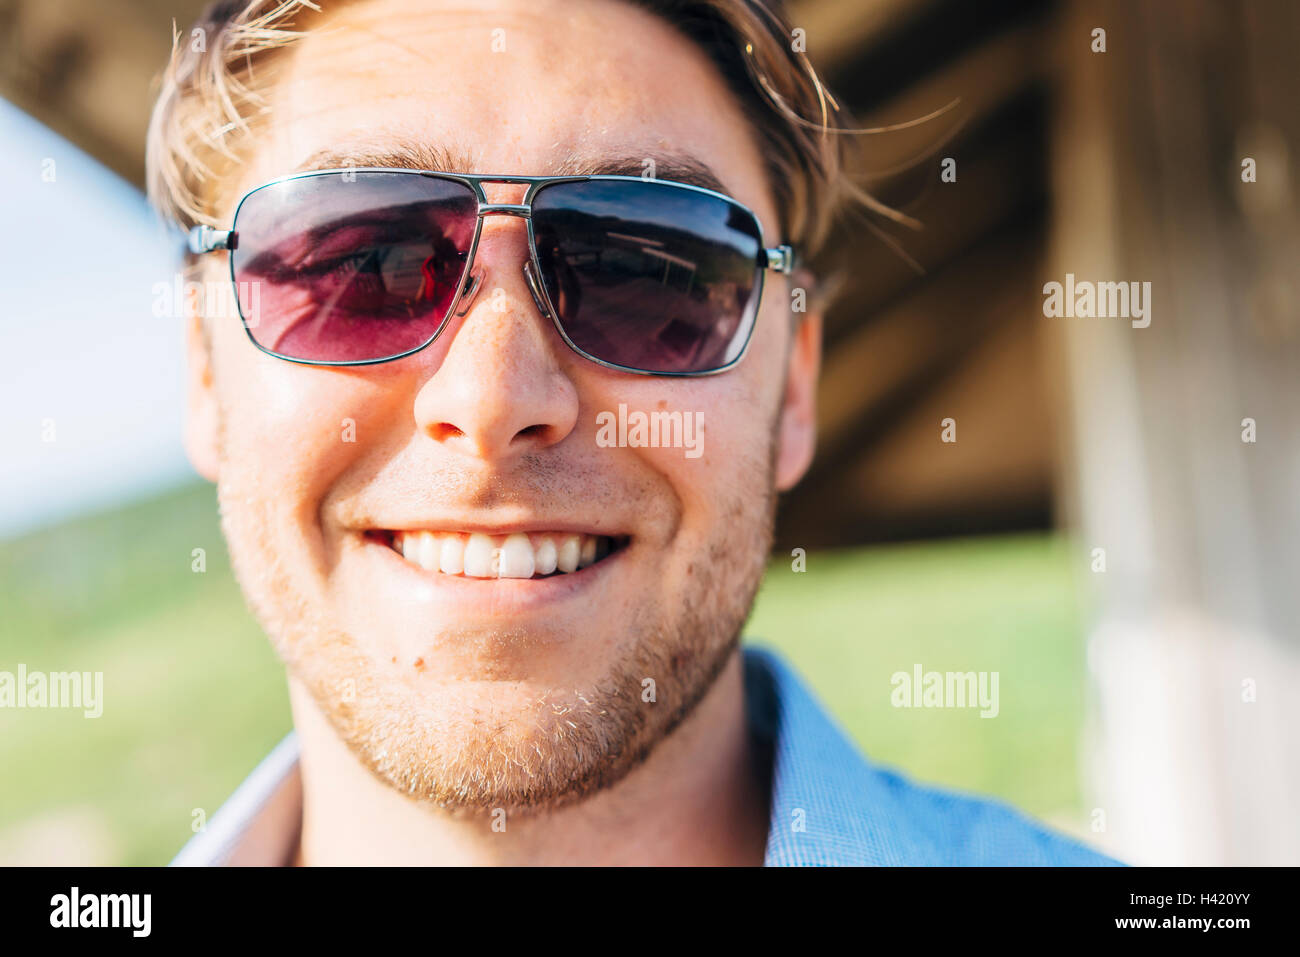 Smiling Caucasian man wearing sunglasses Stock Photo